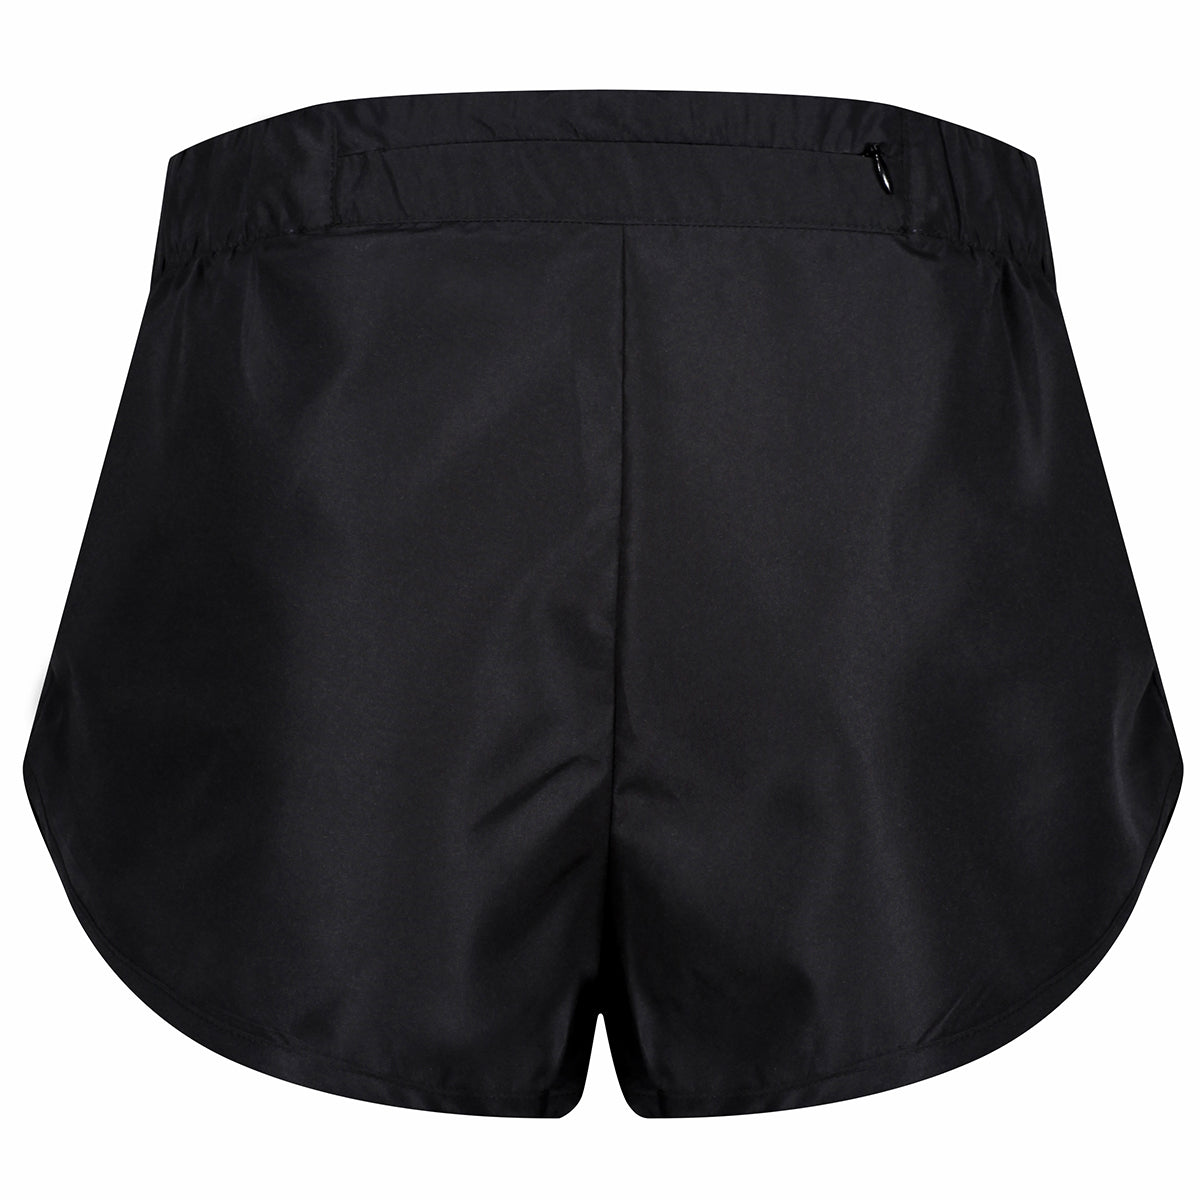 Tikiboo Black Workout Shorts